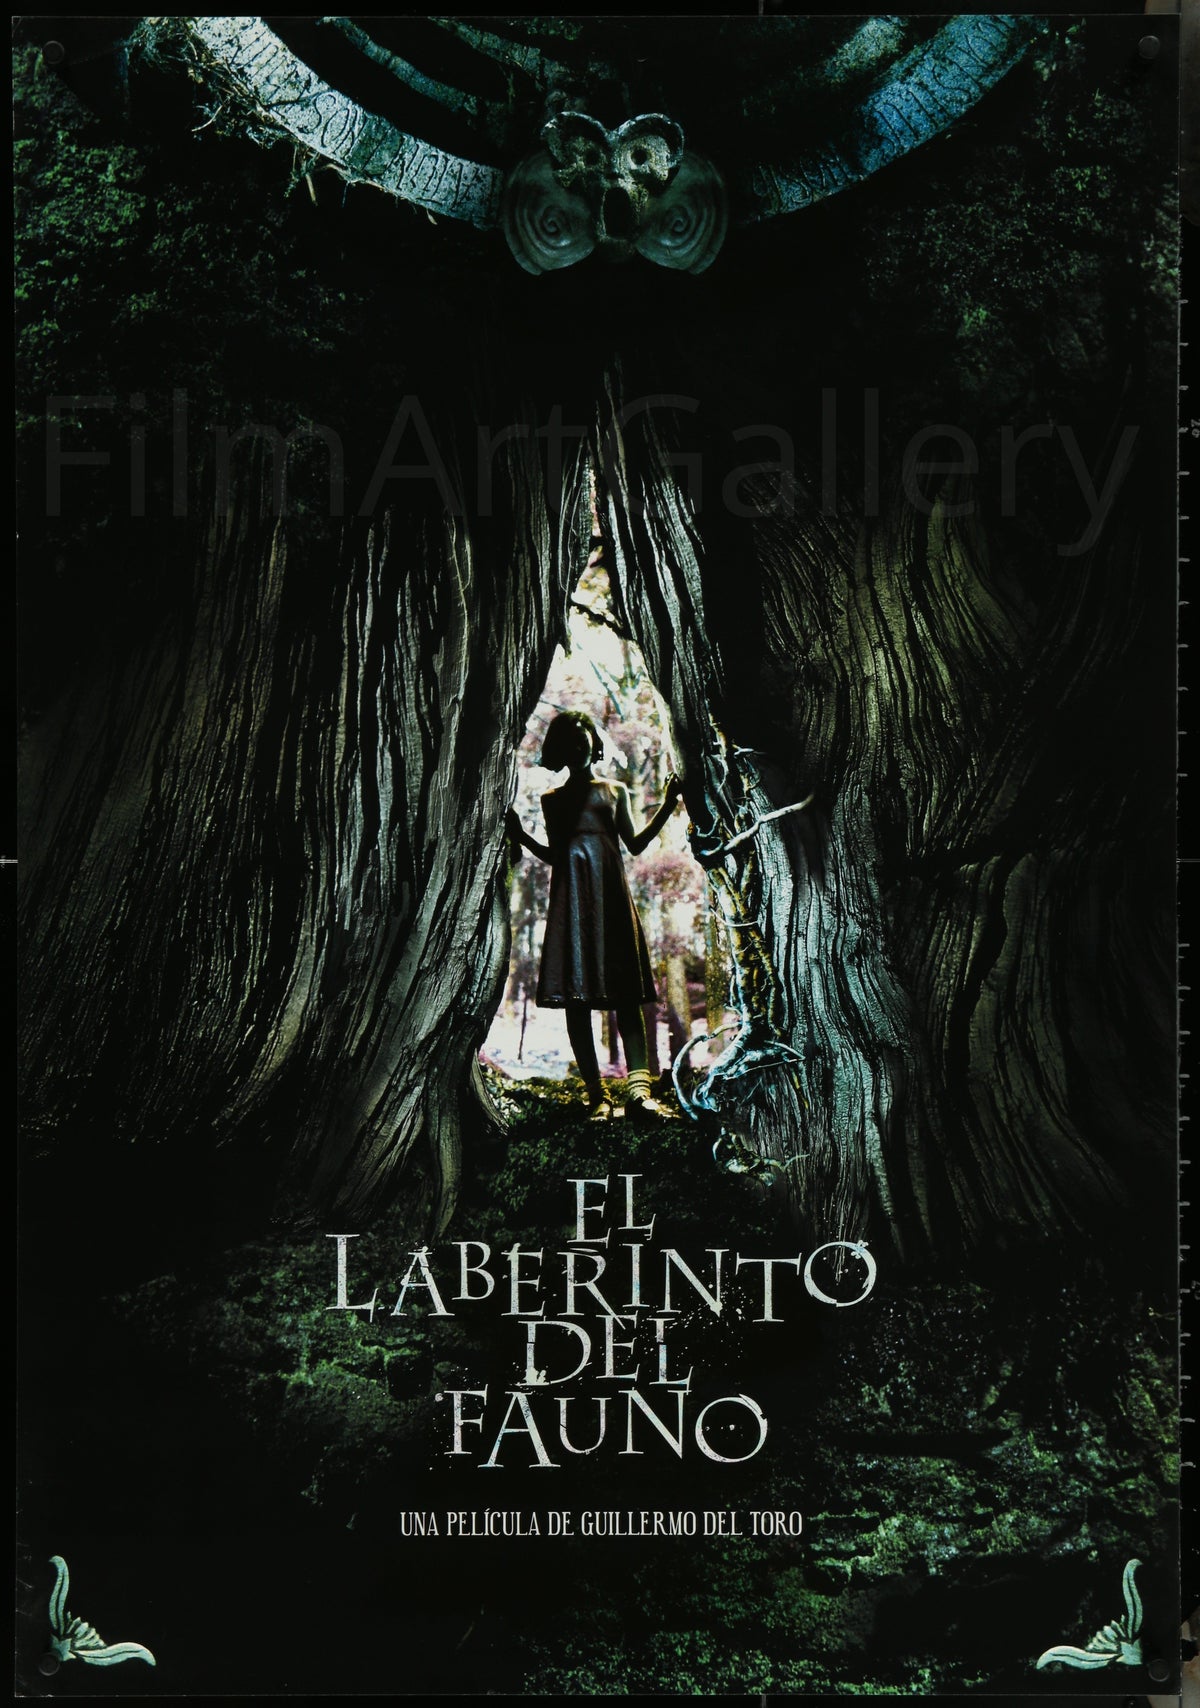 Pan&#39;s Labyrinth 1 Sheet (27x41) Original Vintage Movie Poster